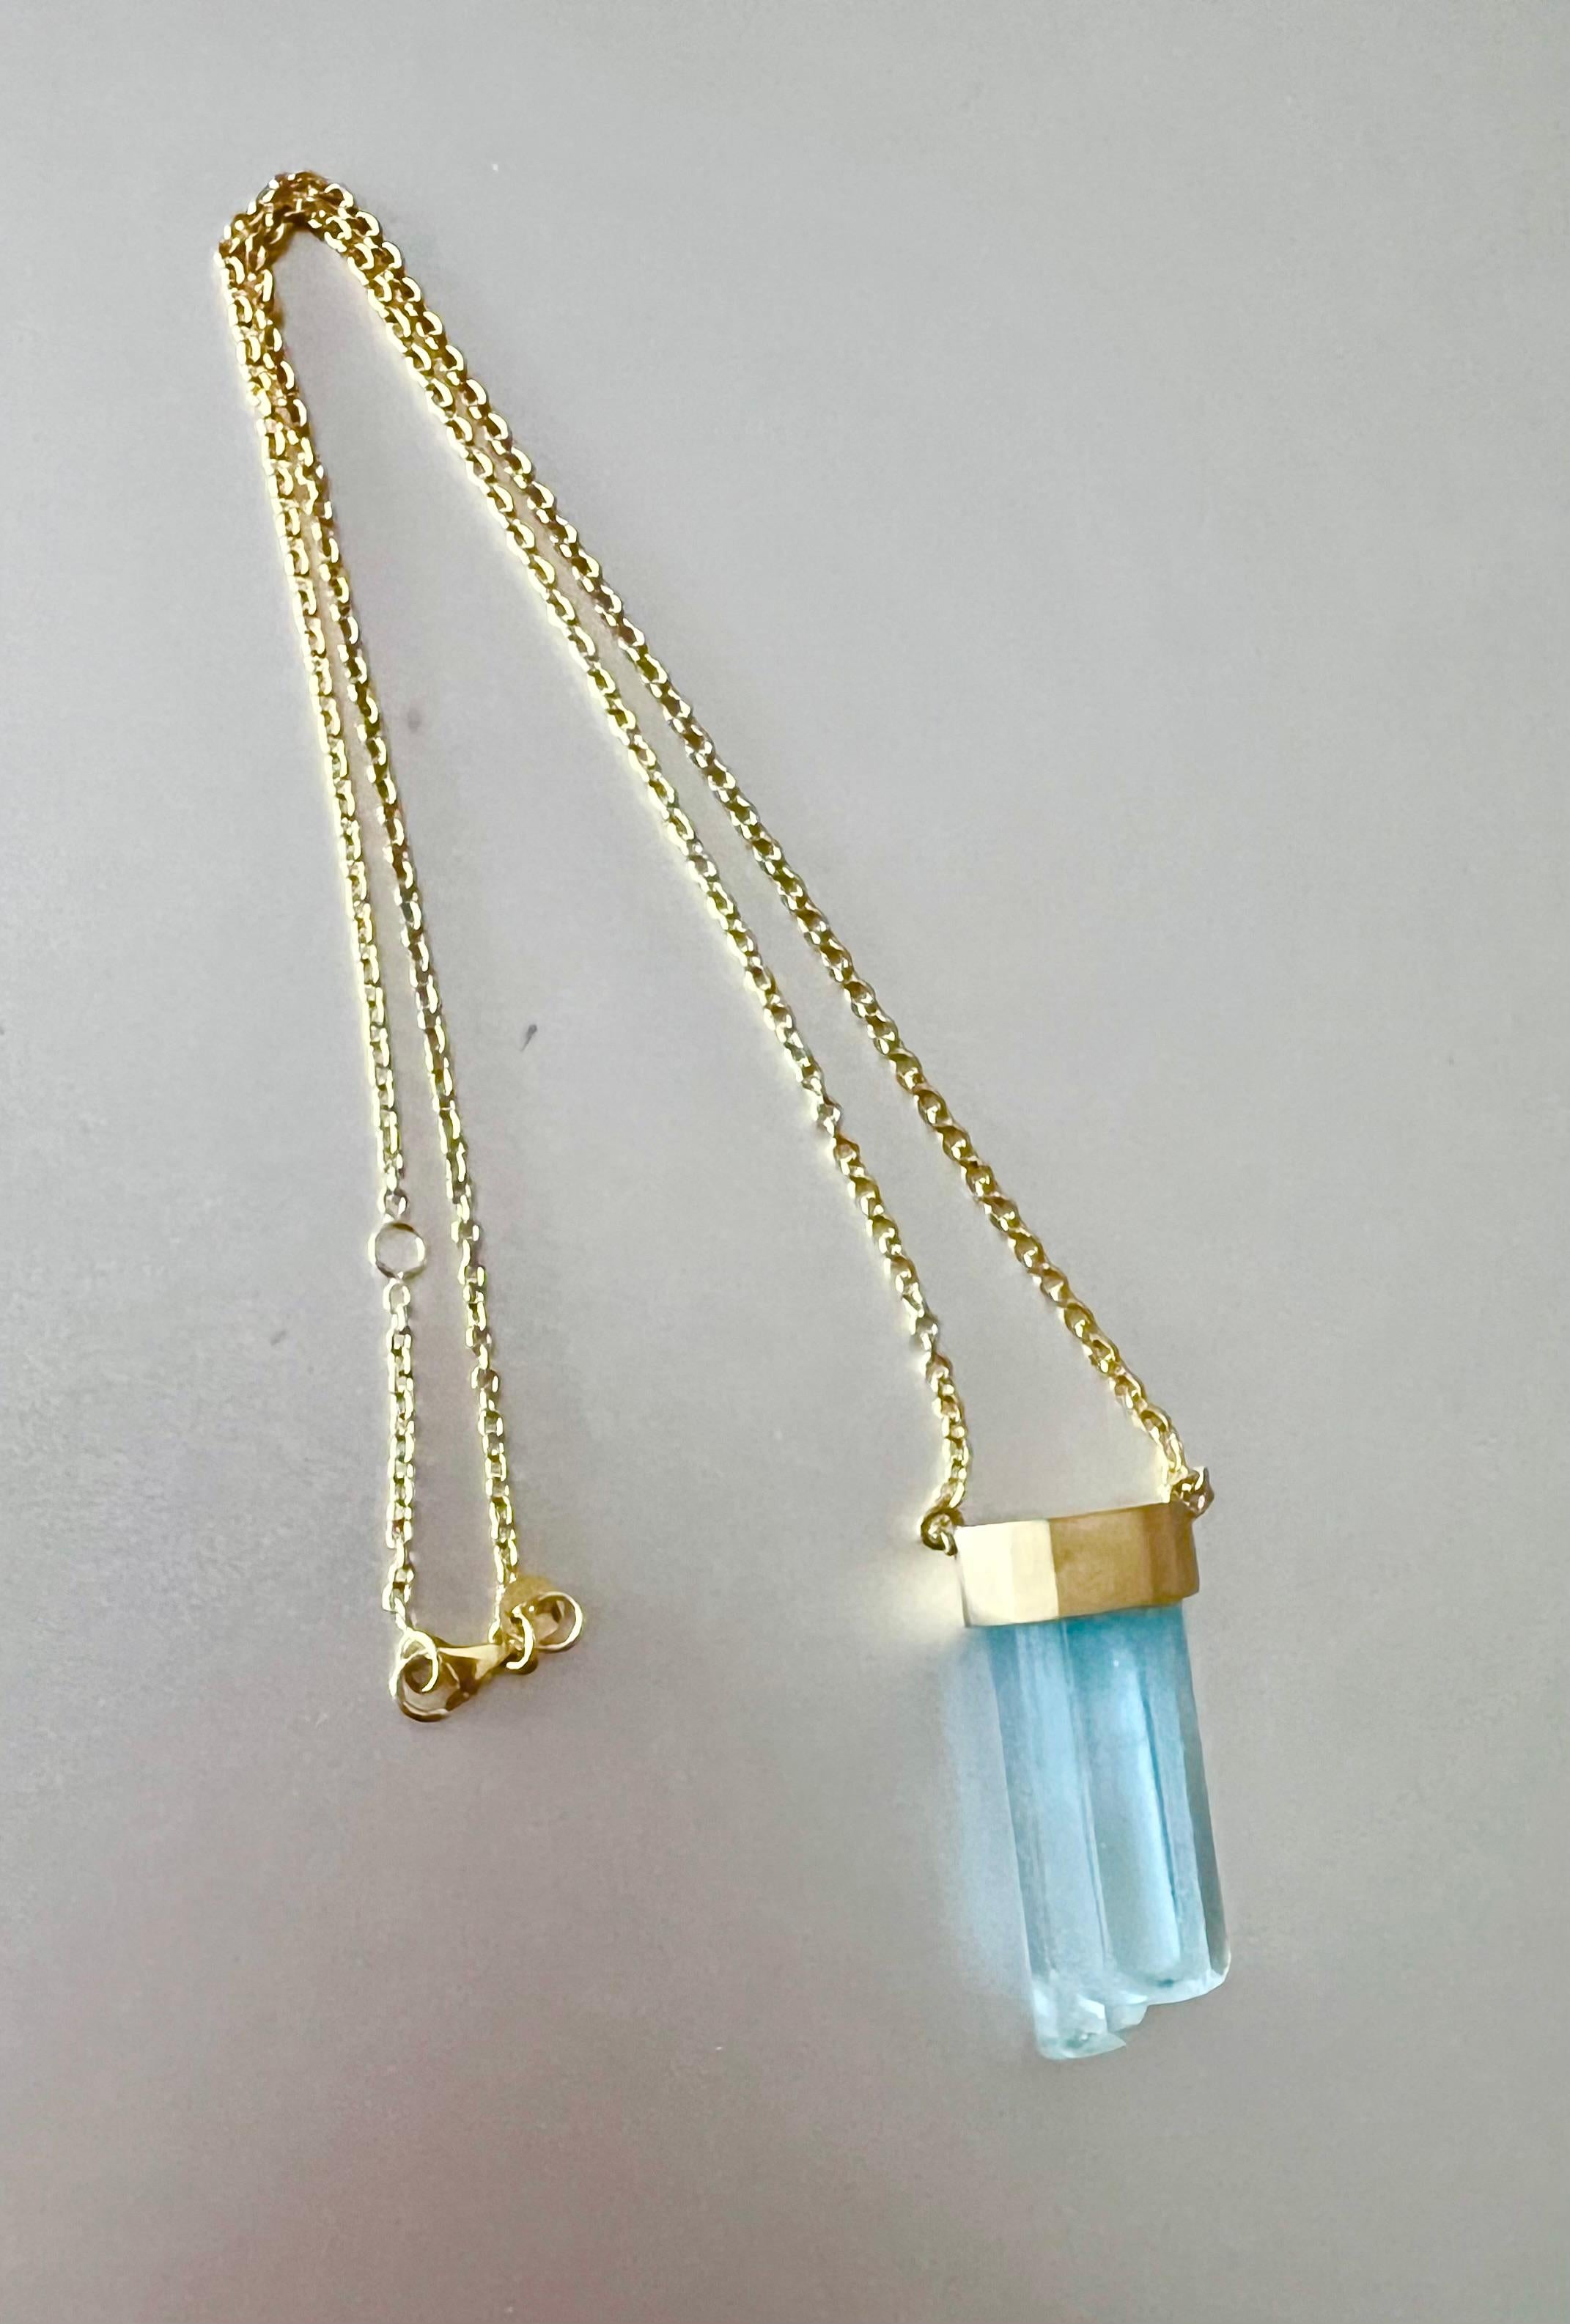 Artisan 18k Gold Natural Aquamarine Manifesting Crystal Necklace one of a kind For Sale